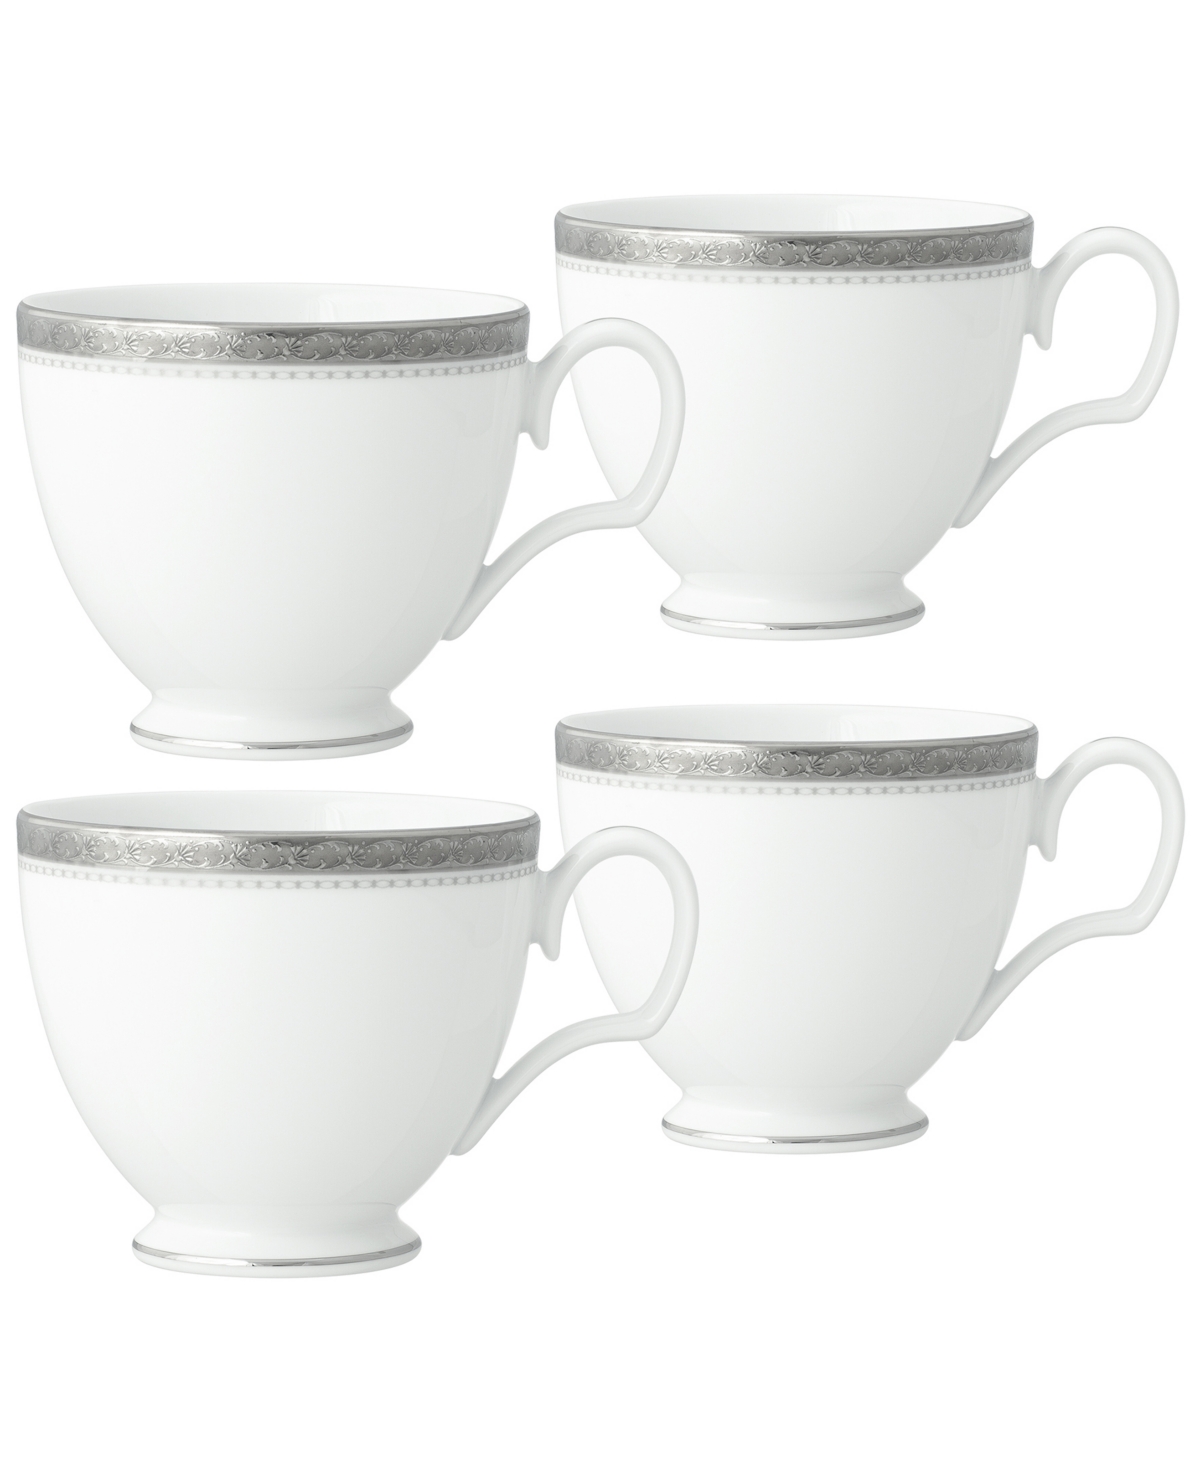 Noritake Charlotta Platinum 4 Piece Cups Set, Service For 4 In White